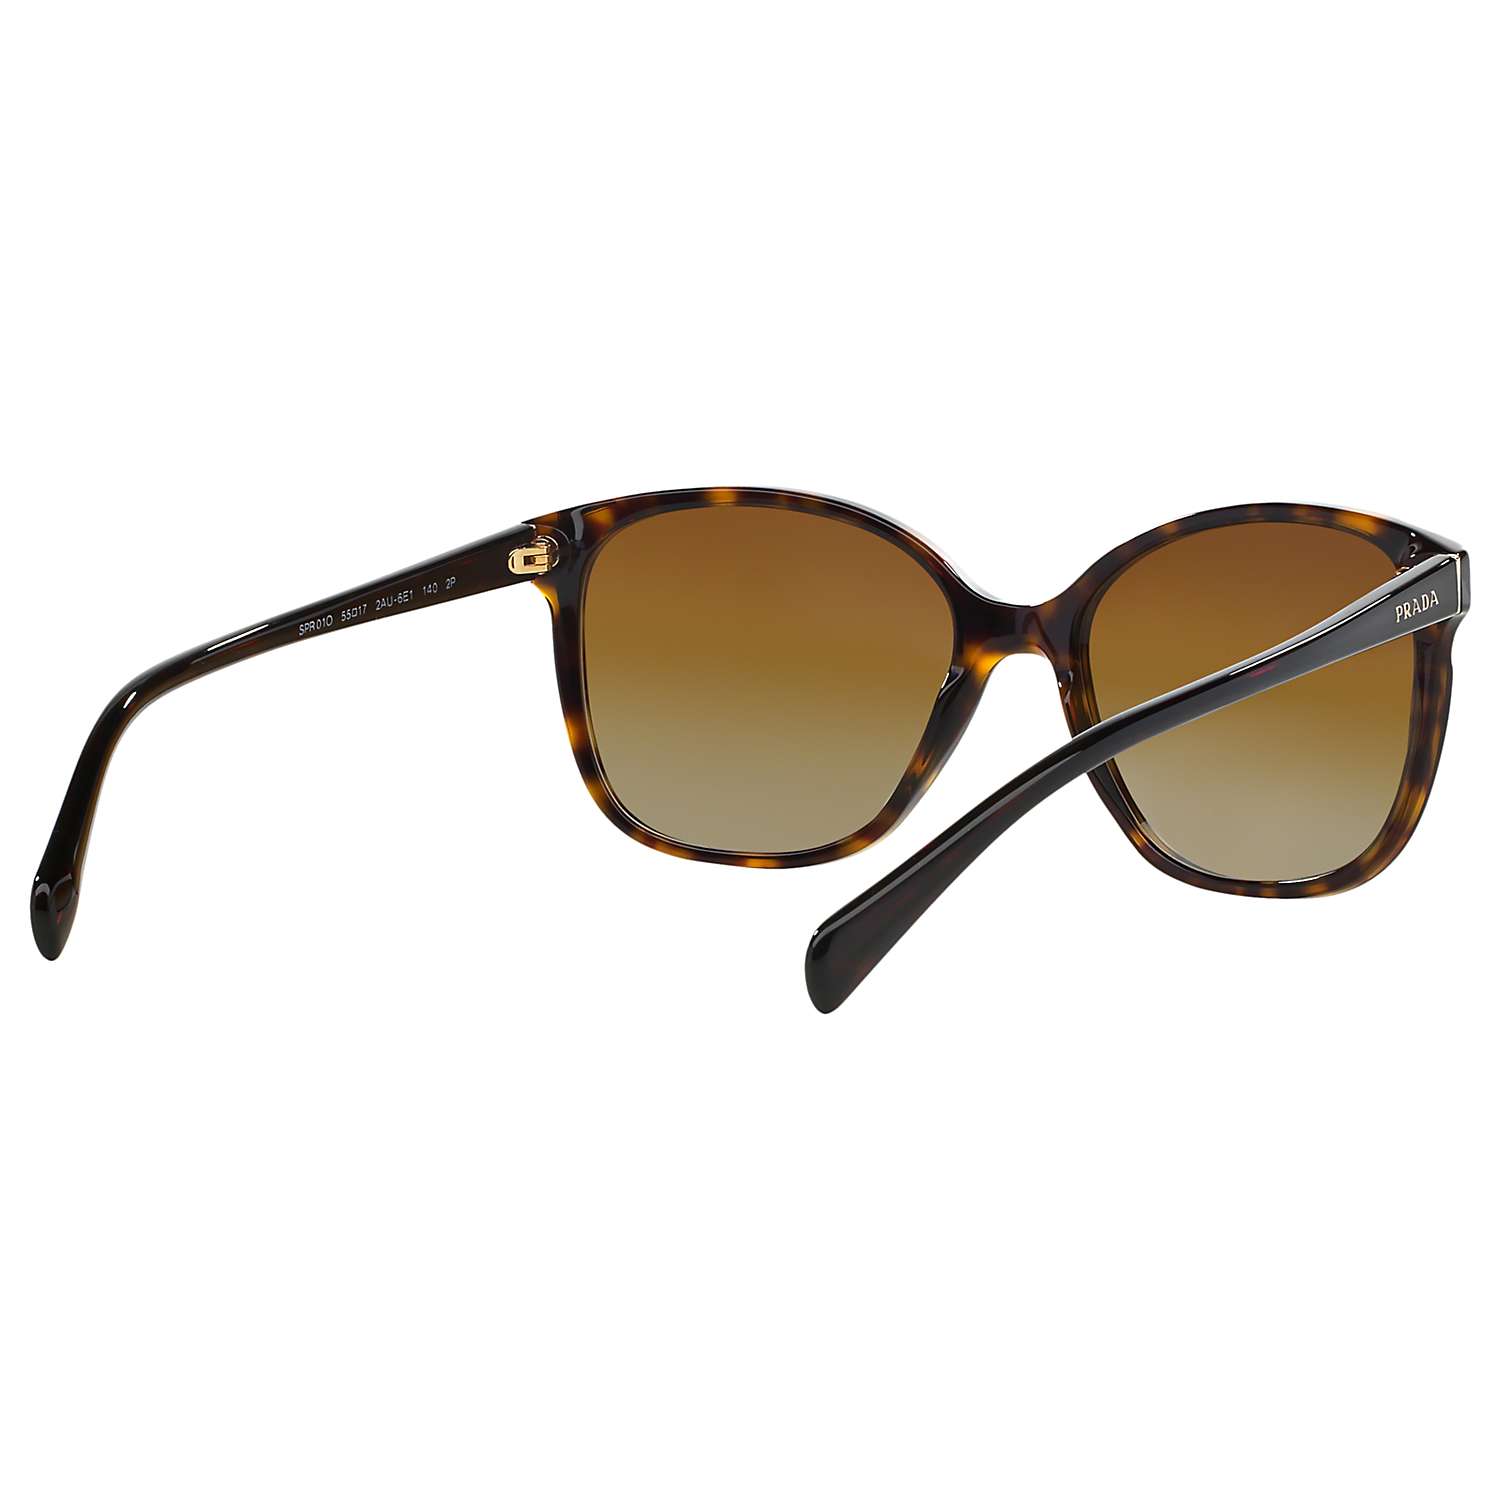 Buy Prada PR01OS Polarised Square Sunglasses, Tortoiseshell Online at johnlewis.com